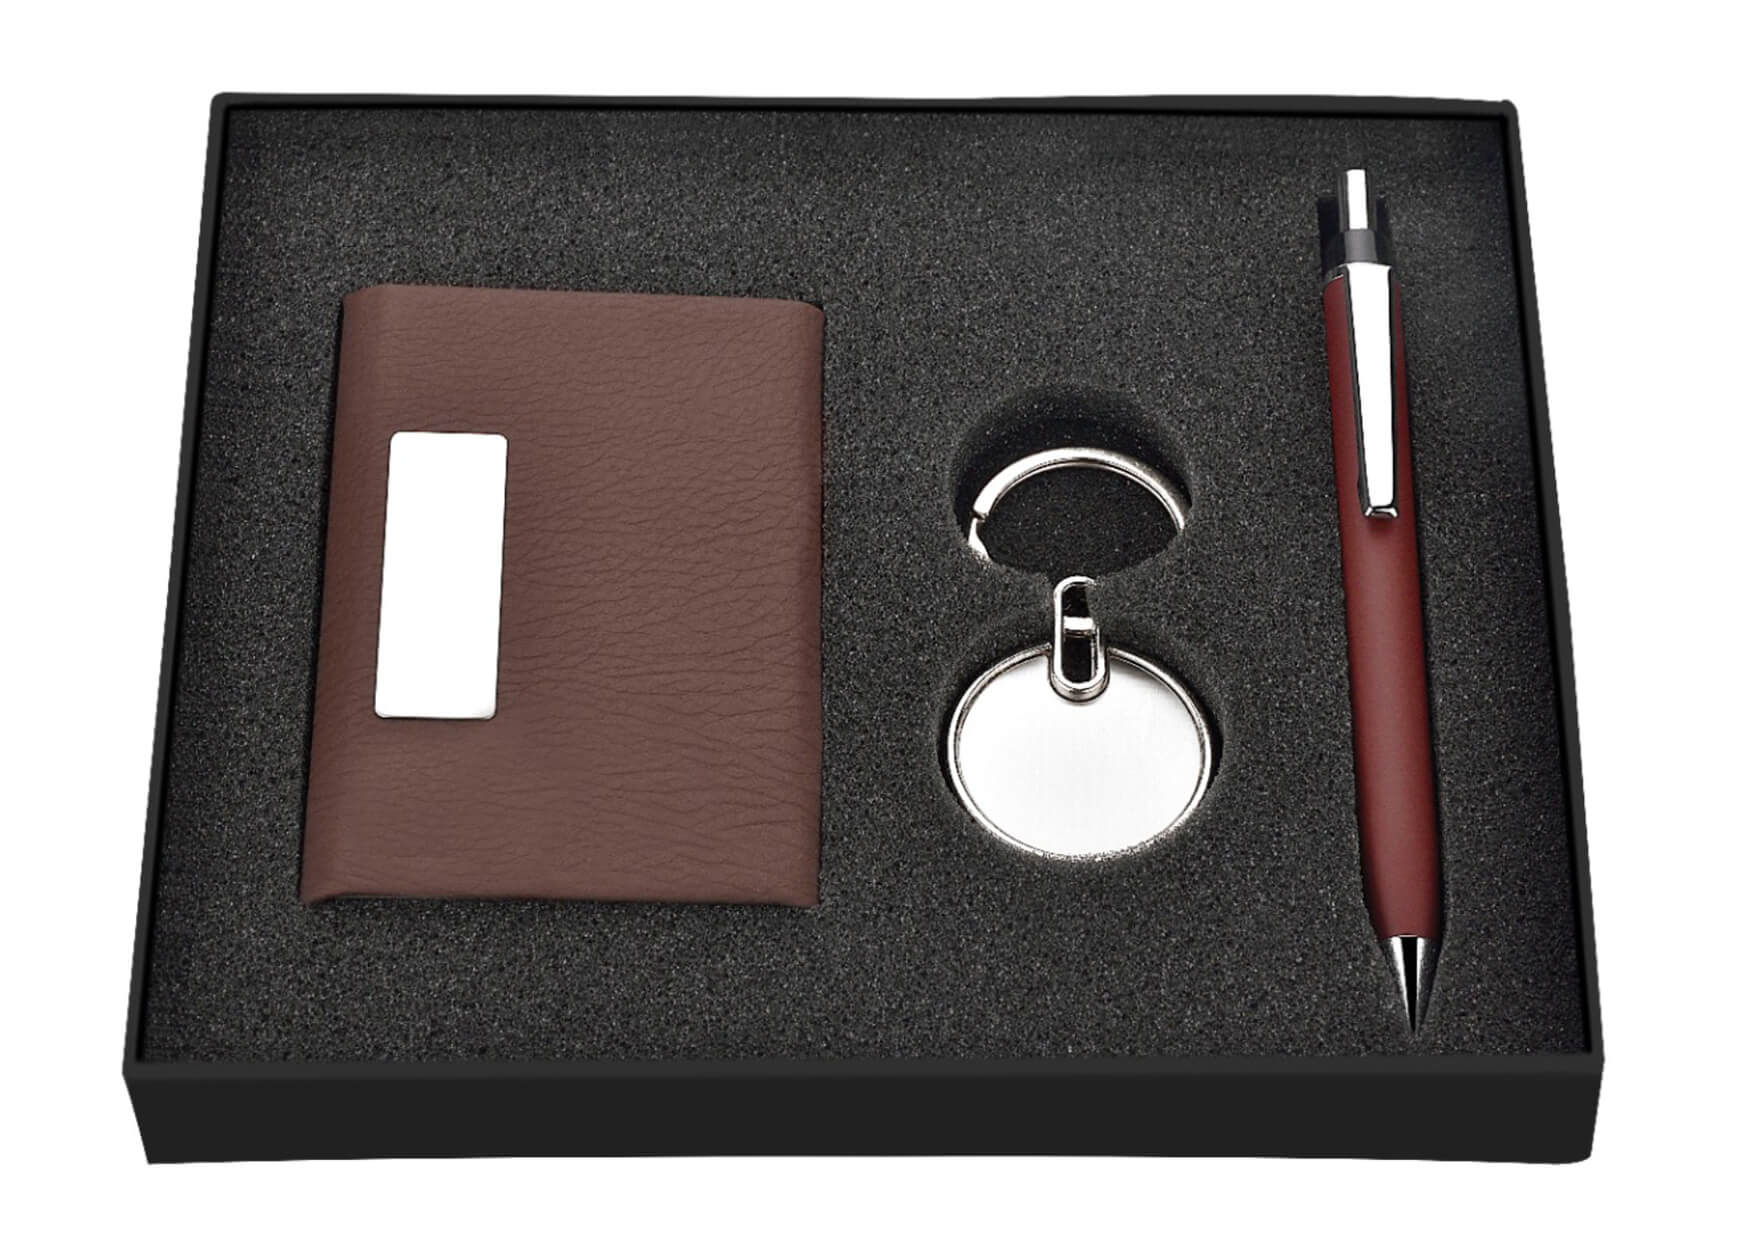 Card Holder, Pen And Keychain Set (3 in 1) Hersheys